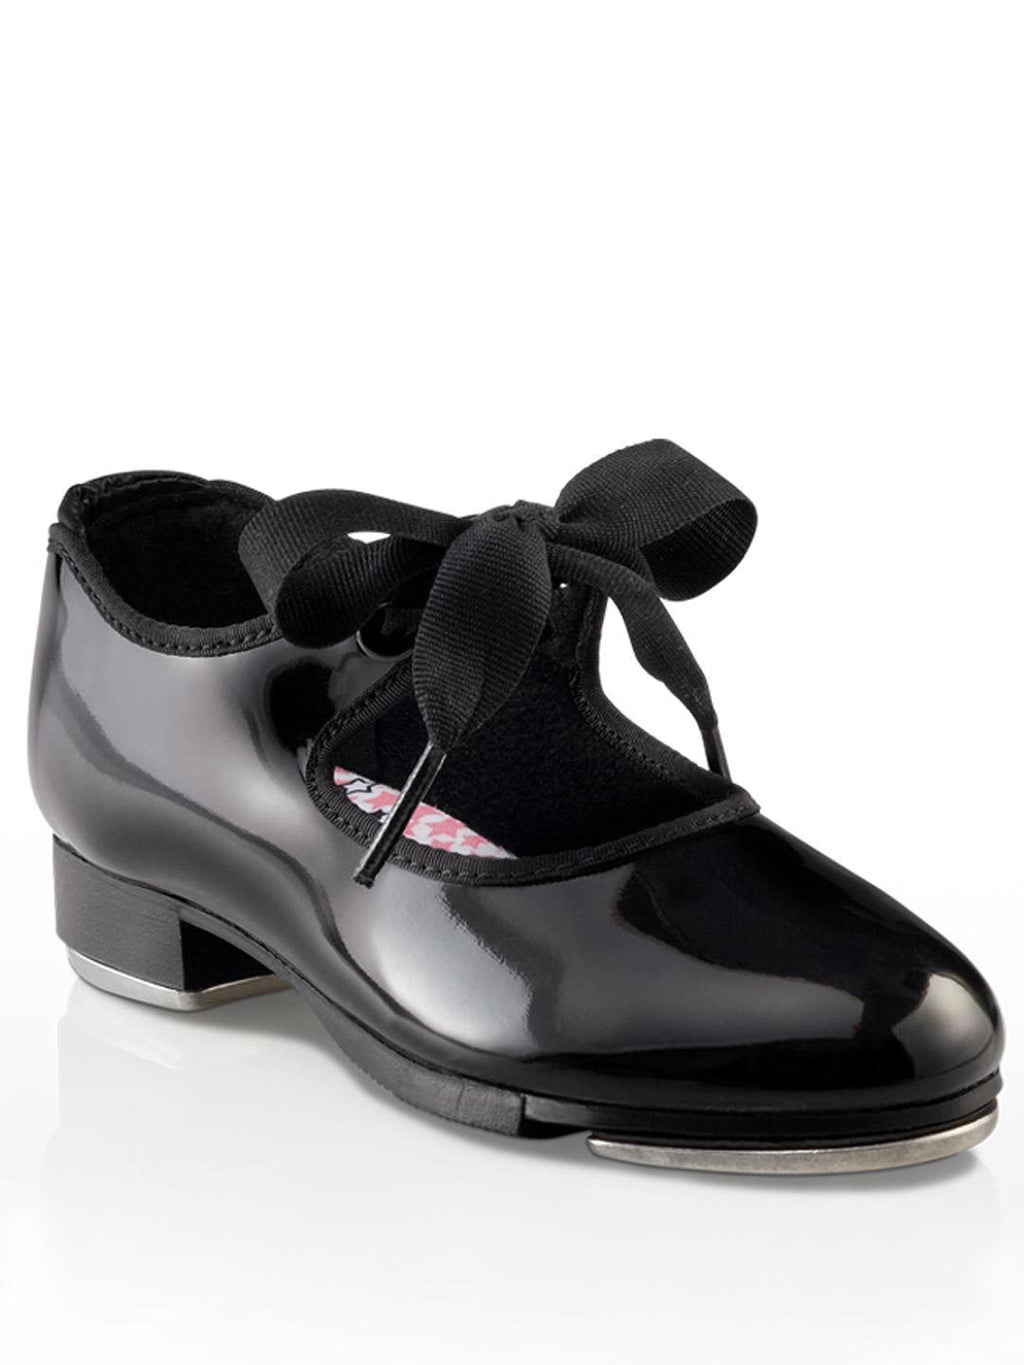 Buy Bloch ETU Pointe Shoe Online at $140.00